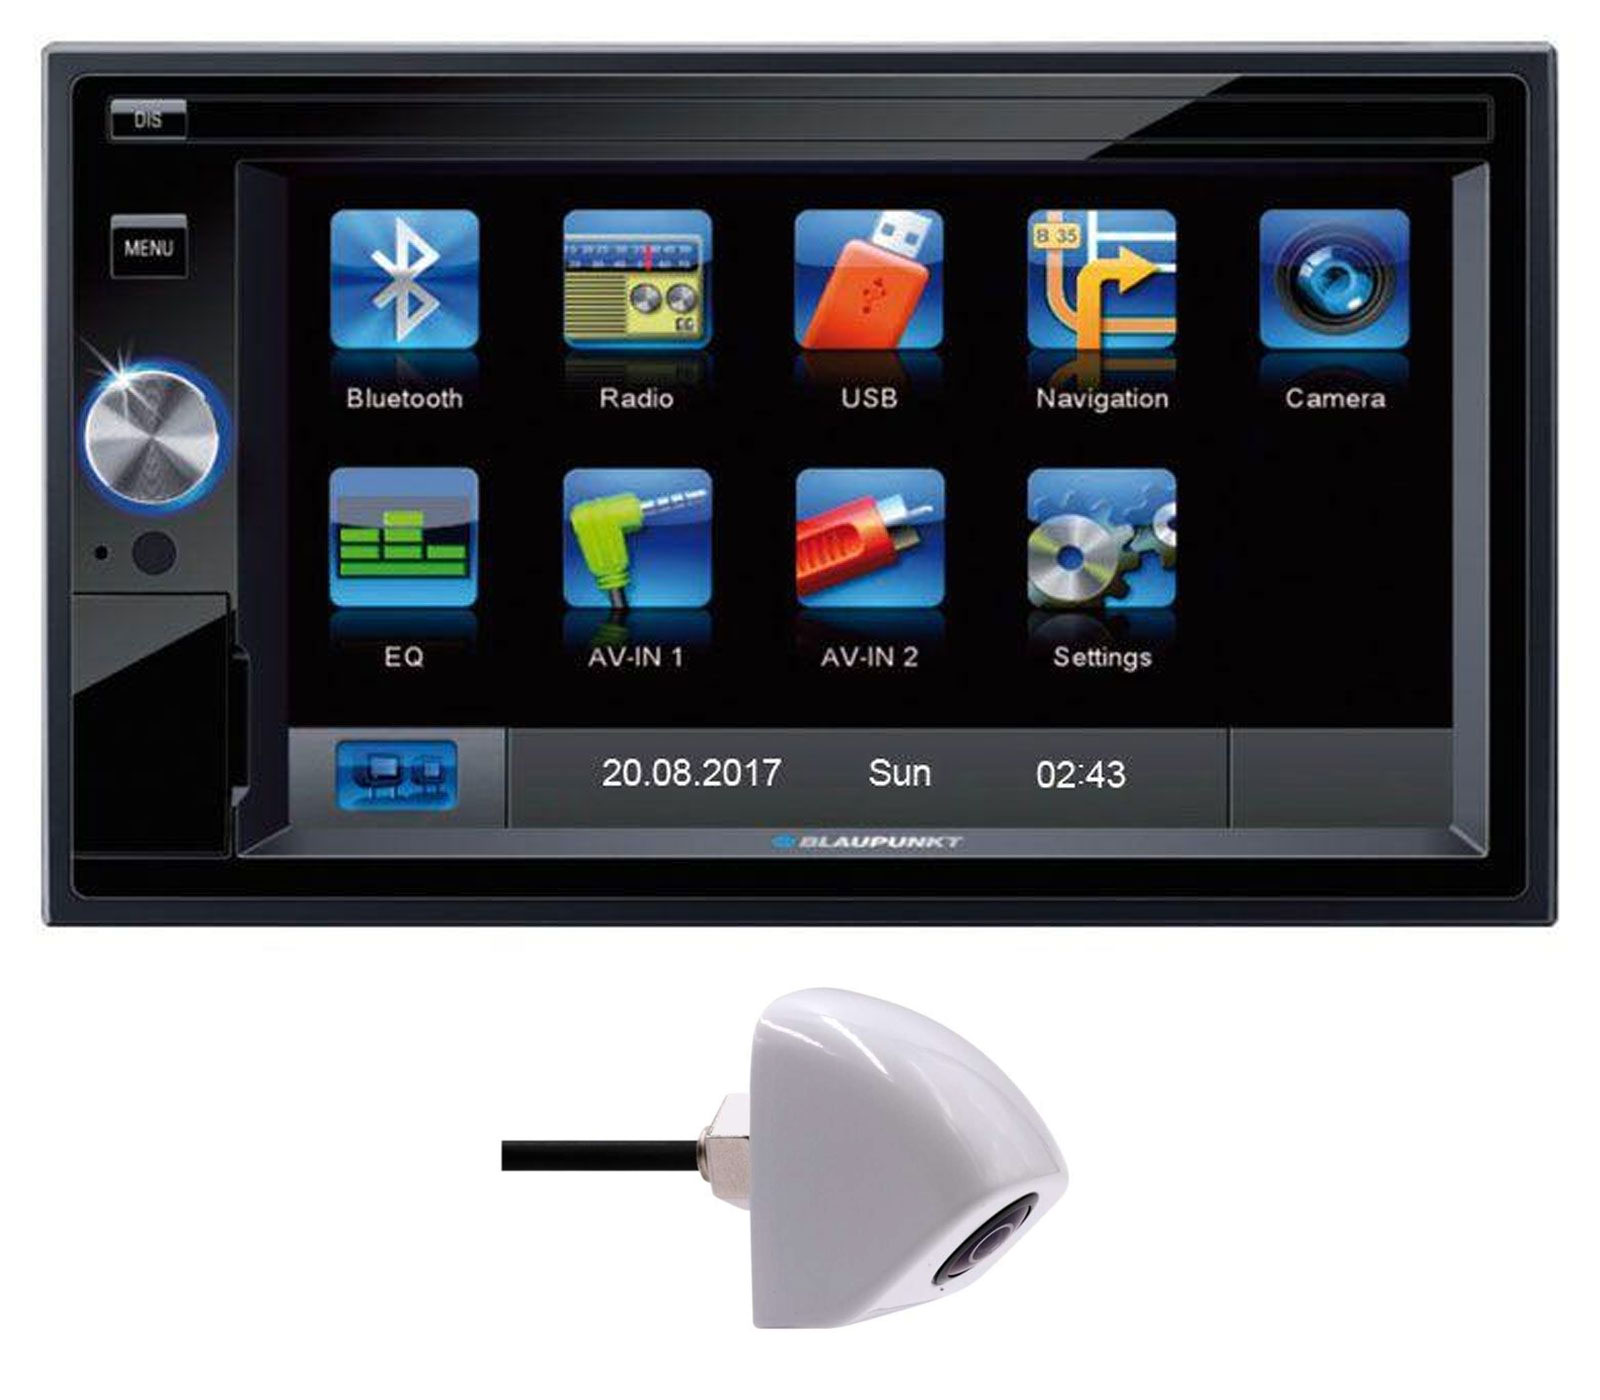 Blaupunkt Santa Cruz 370 EU + RVC 4.4A - 2-DIN Navigation mit Touchscreen / Bluetooth / TMC / USB